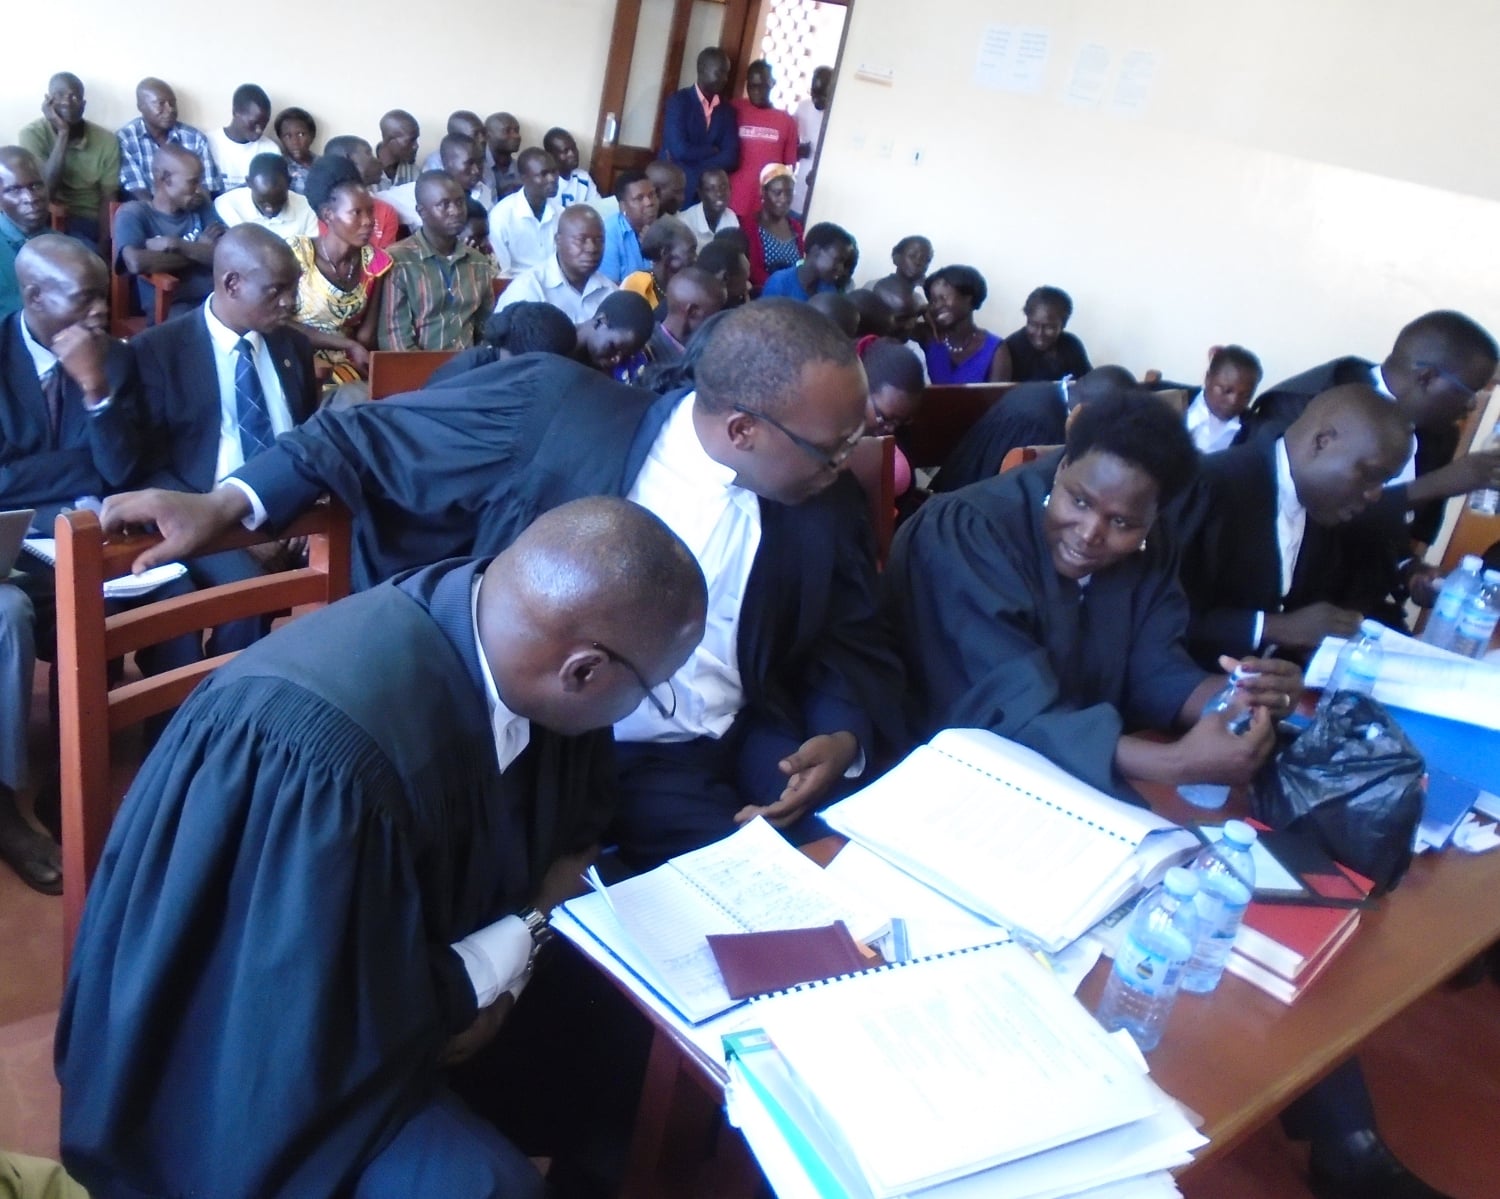 A trial for history: Thomas Kwoyelo in Uganda